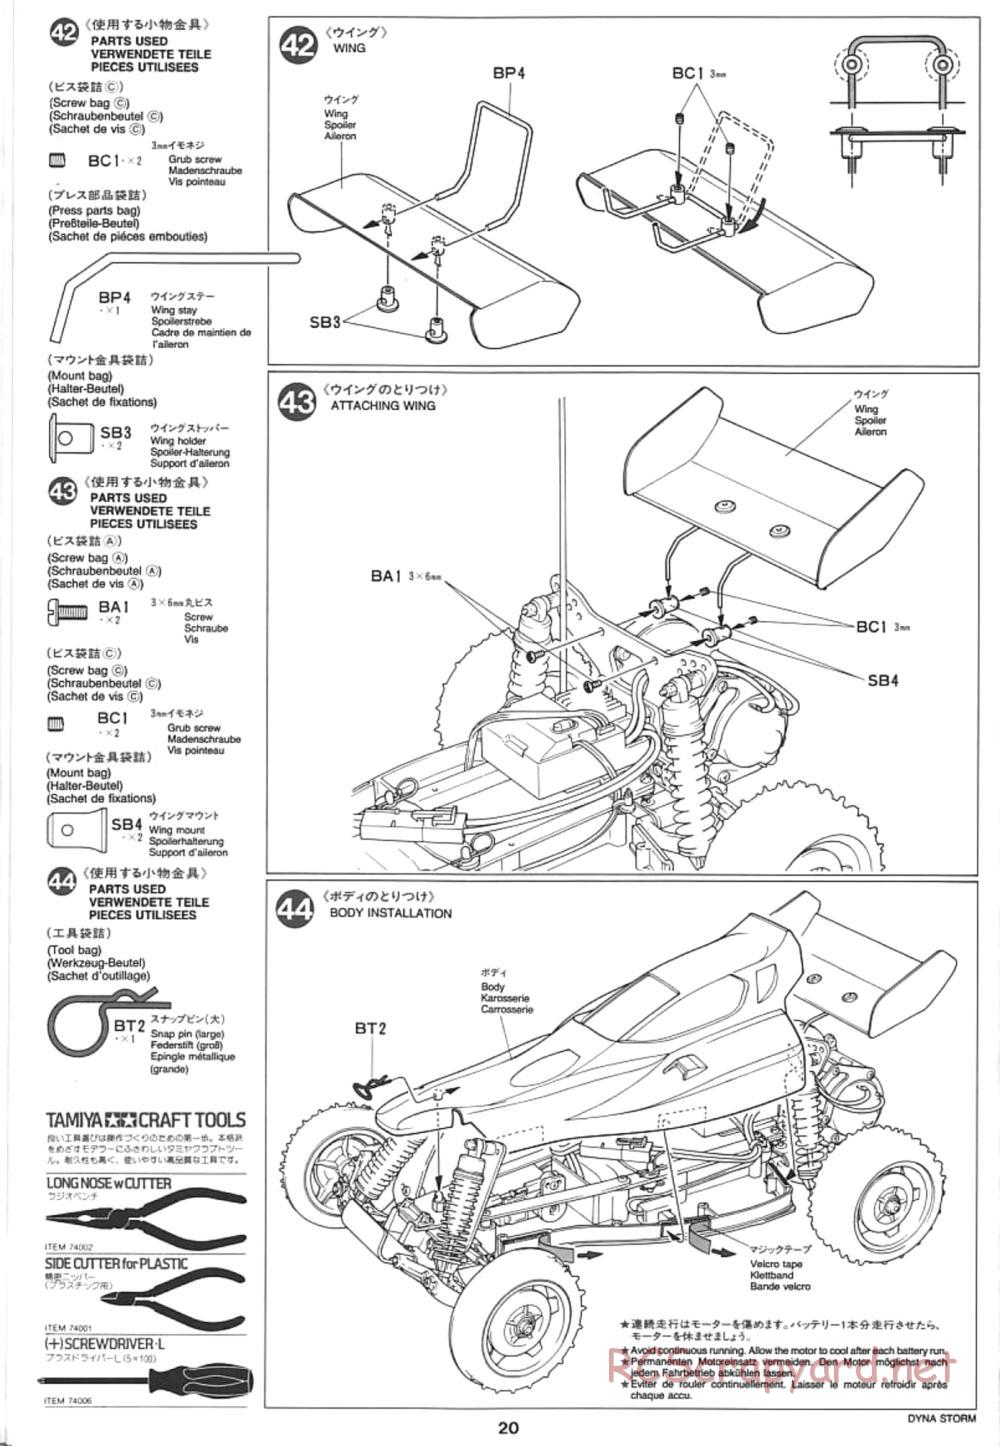 Tamiya - Dyna Storm Chassis - Manual - Page 20